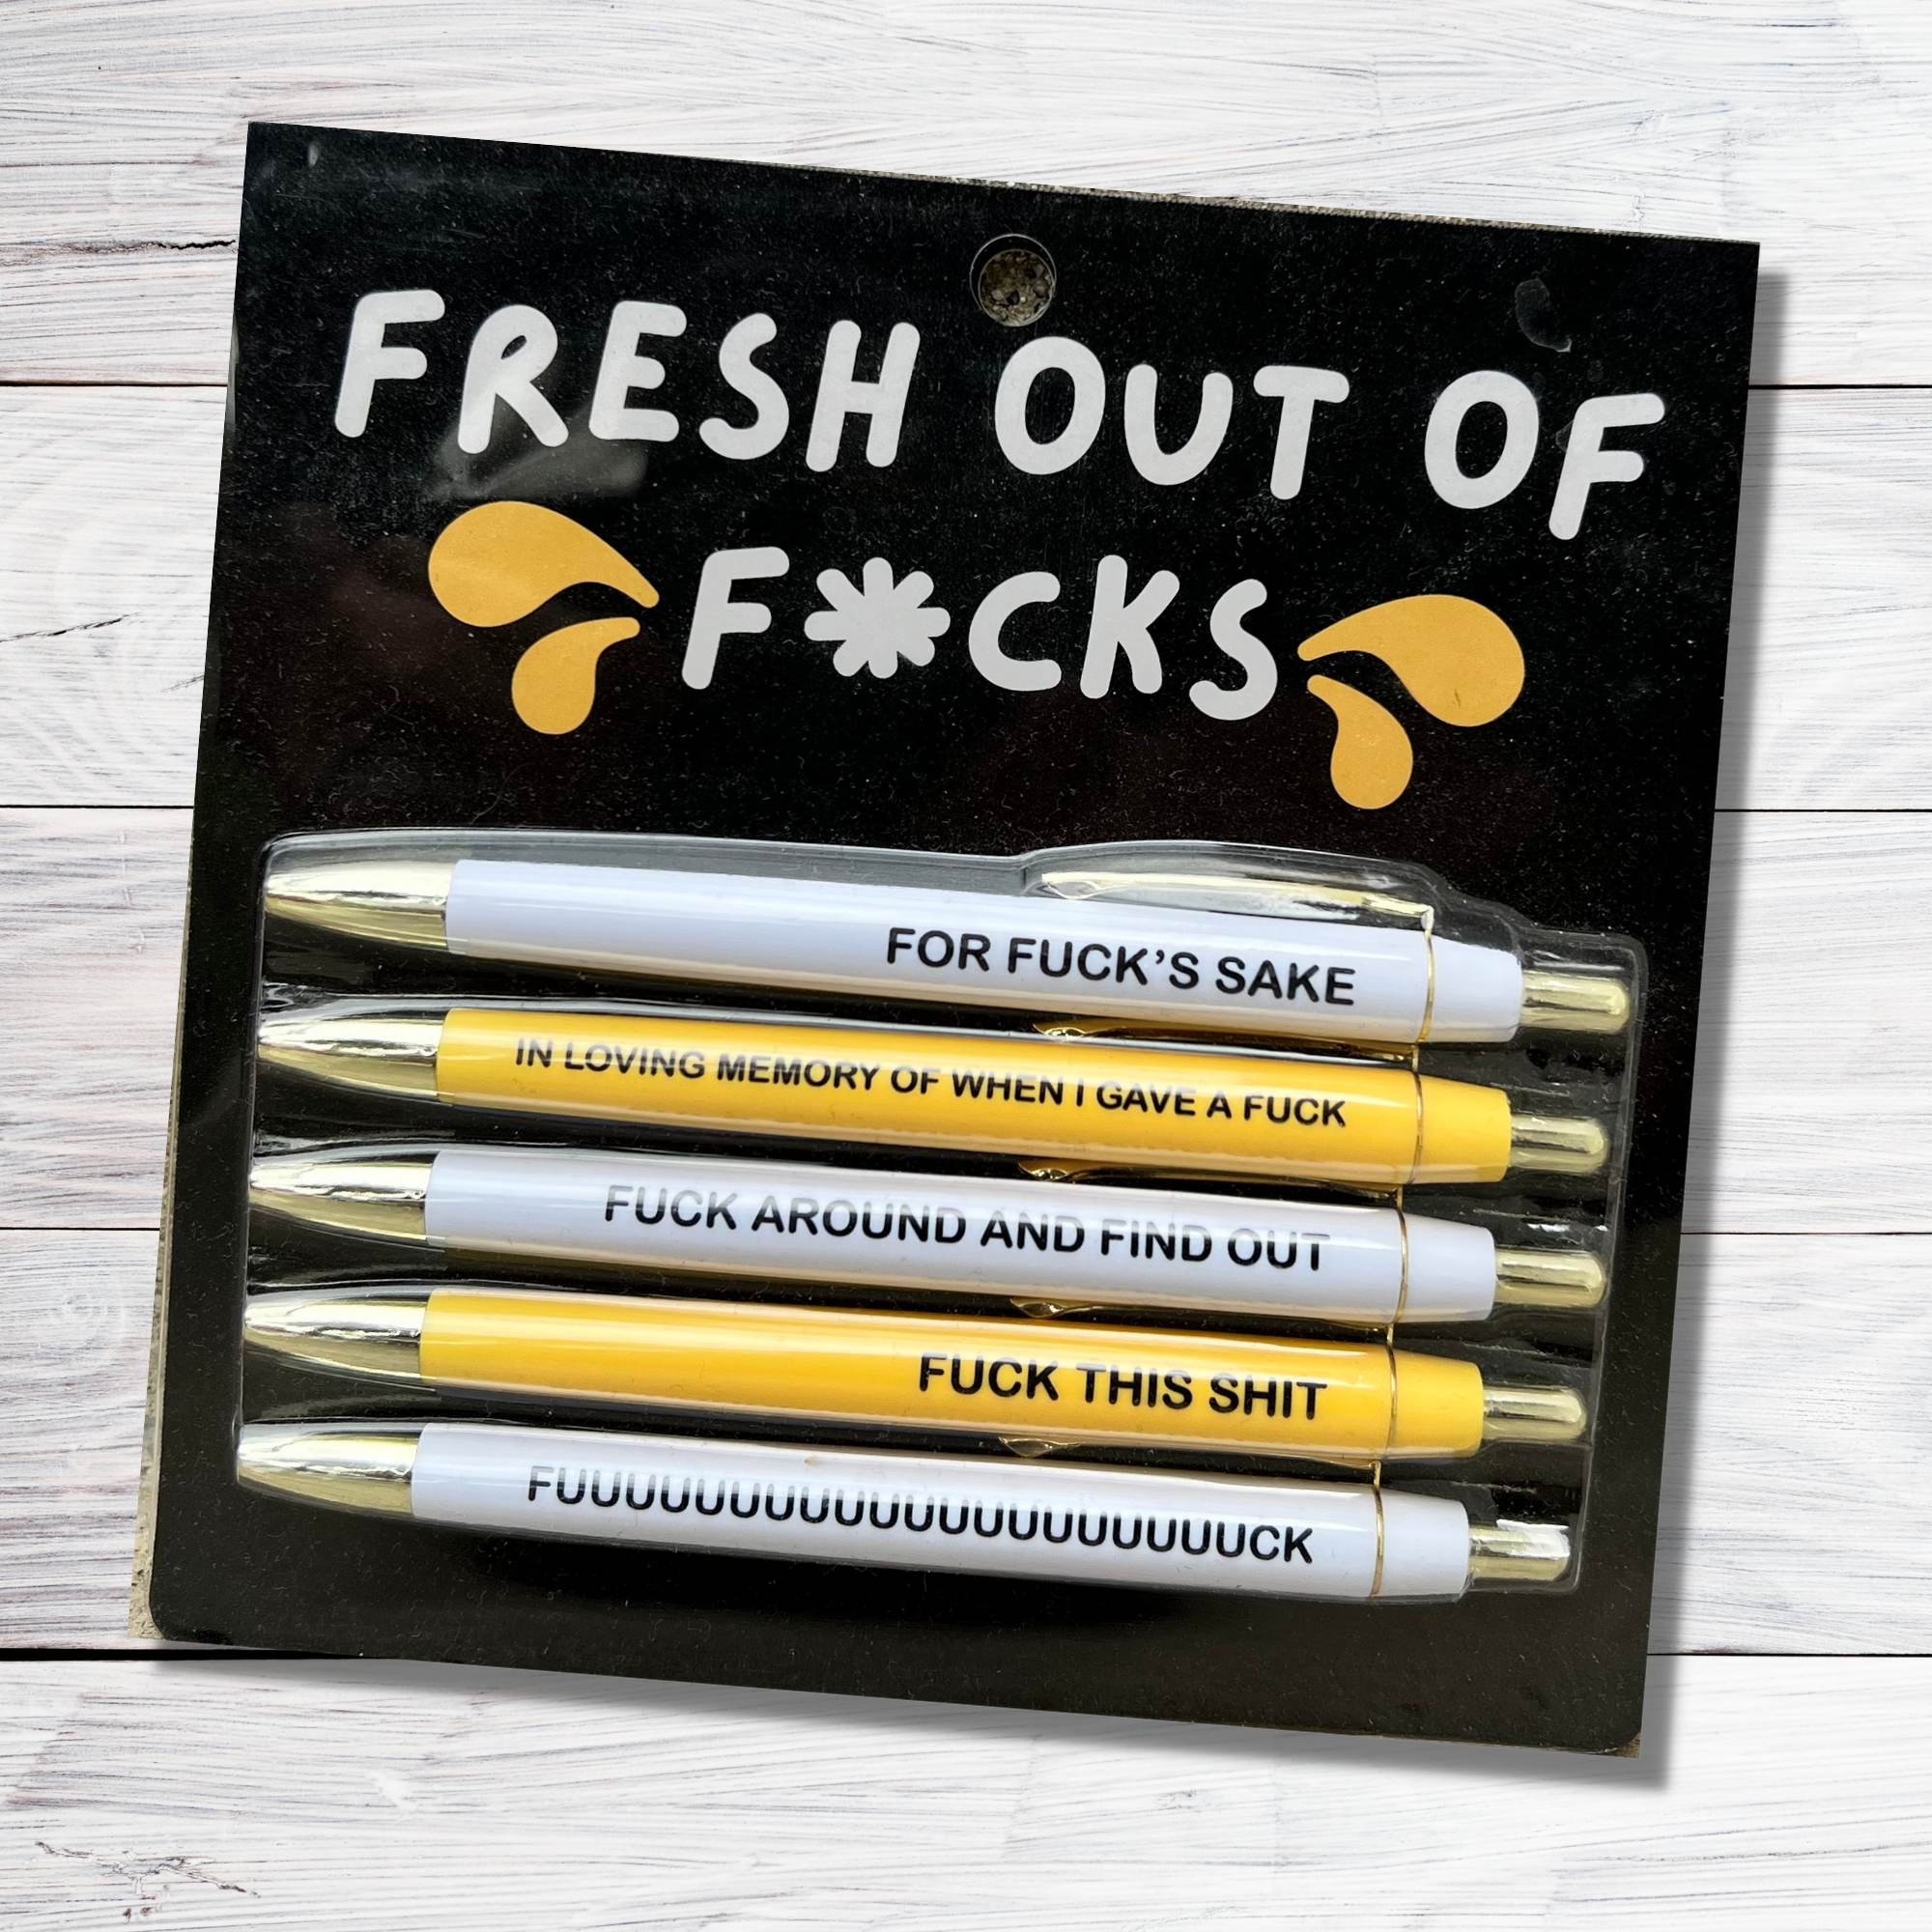 Fuck Yeah: Three Pens